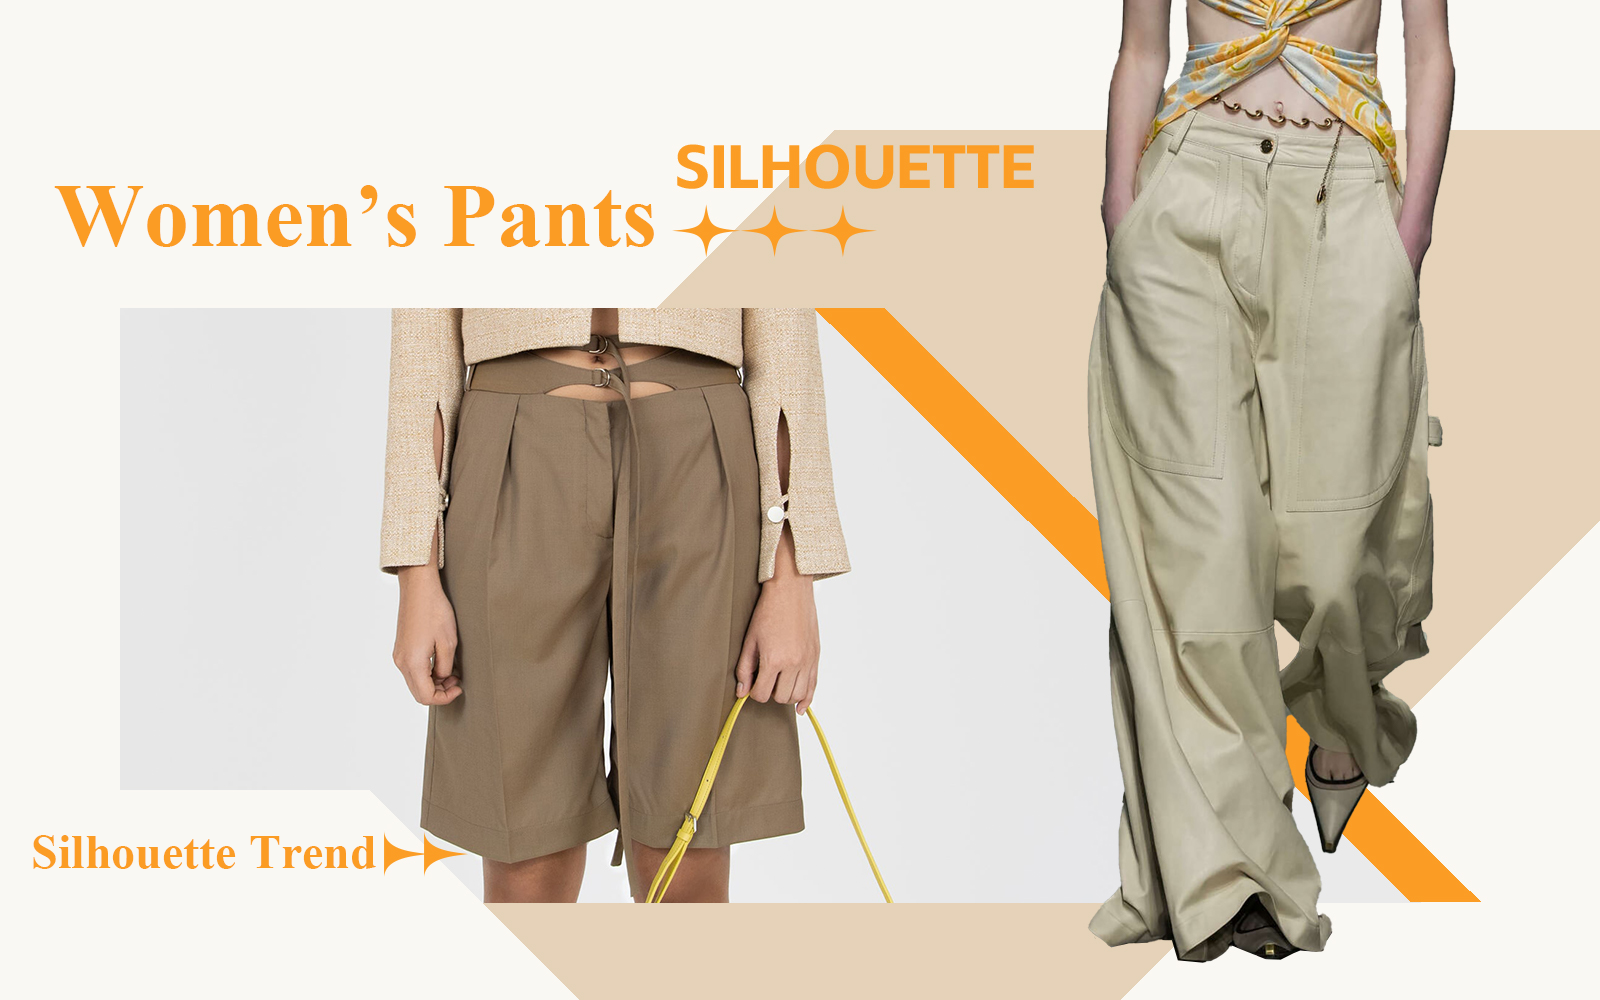 Light Modern -- The Silhouette Trend for Women's Pants